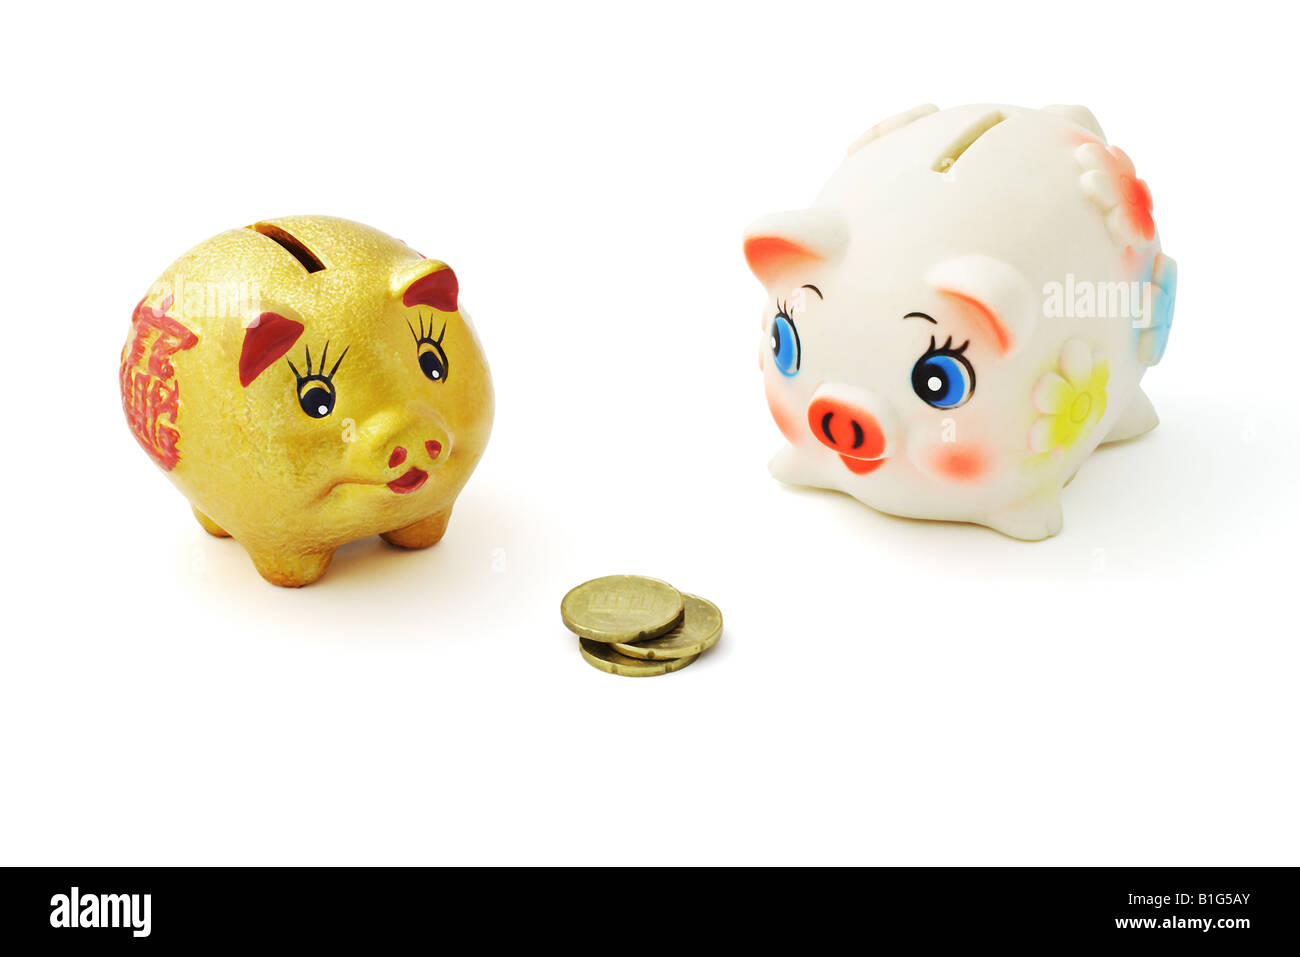 Gold Chinese Piggy Bank - Ceramic